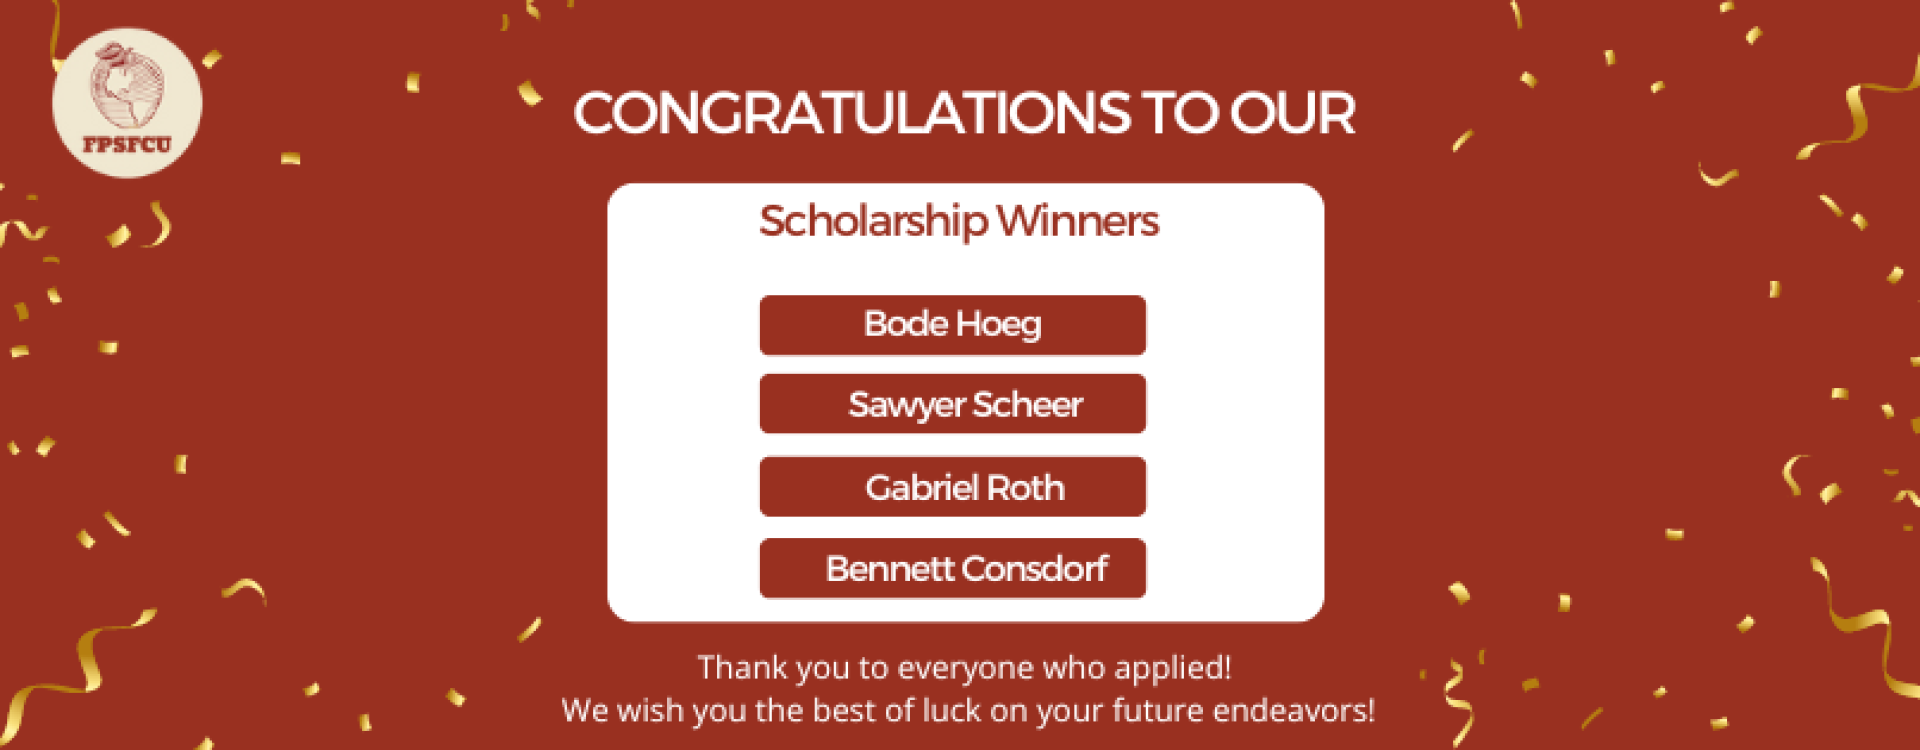 Scholarship winners